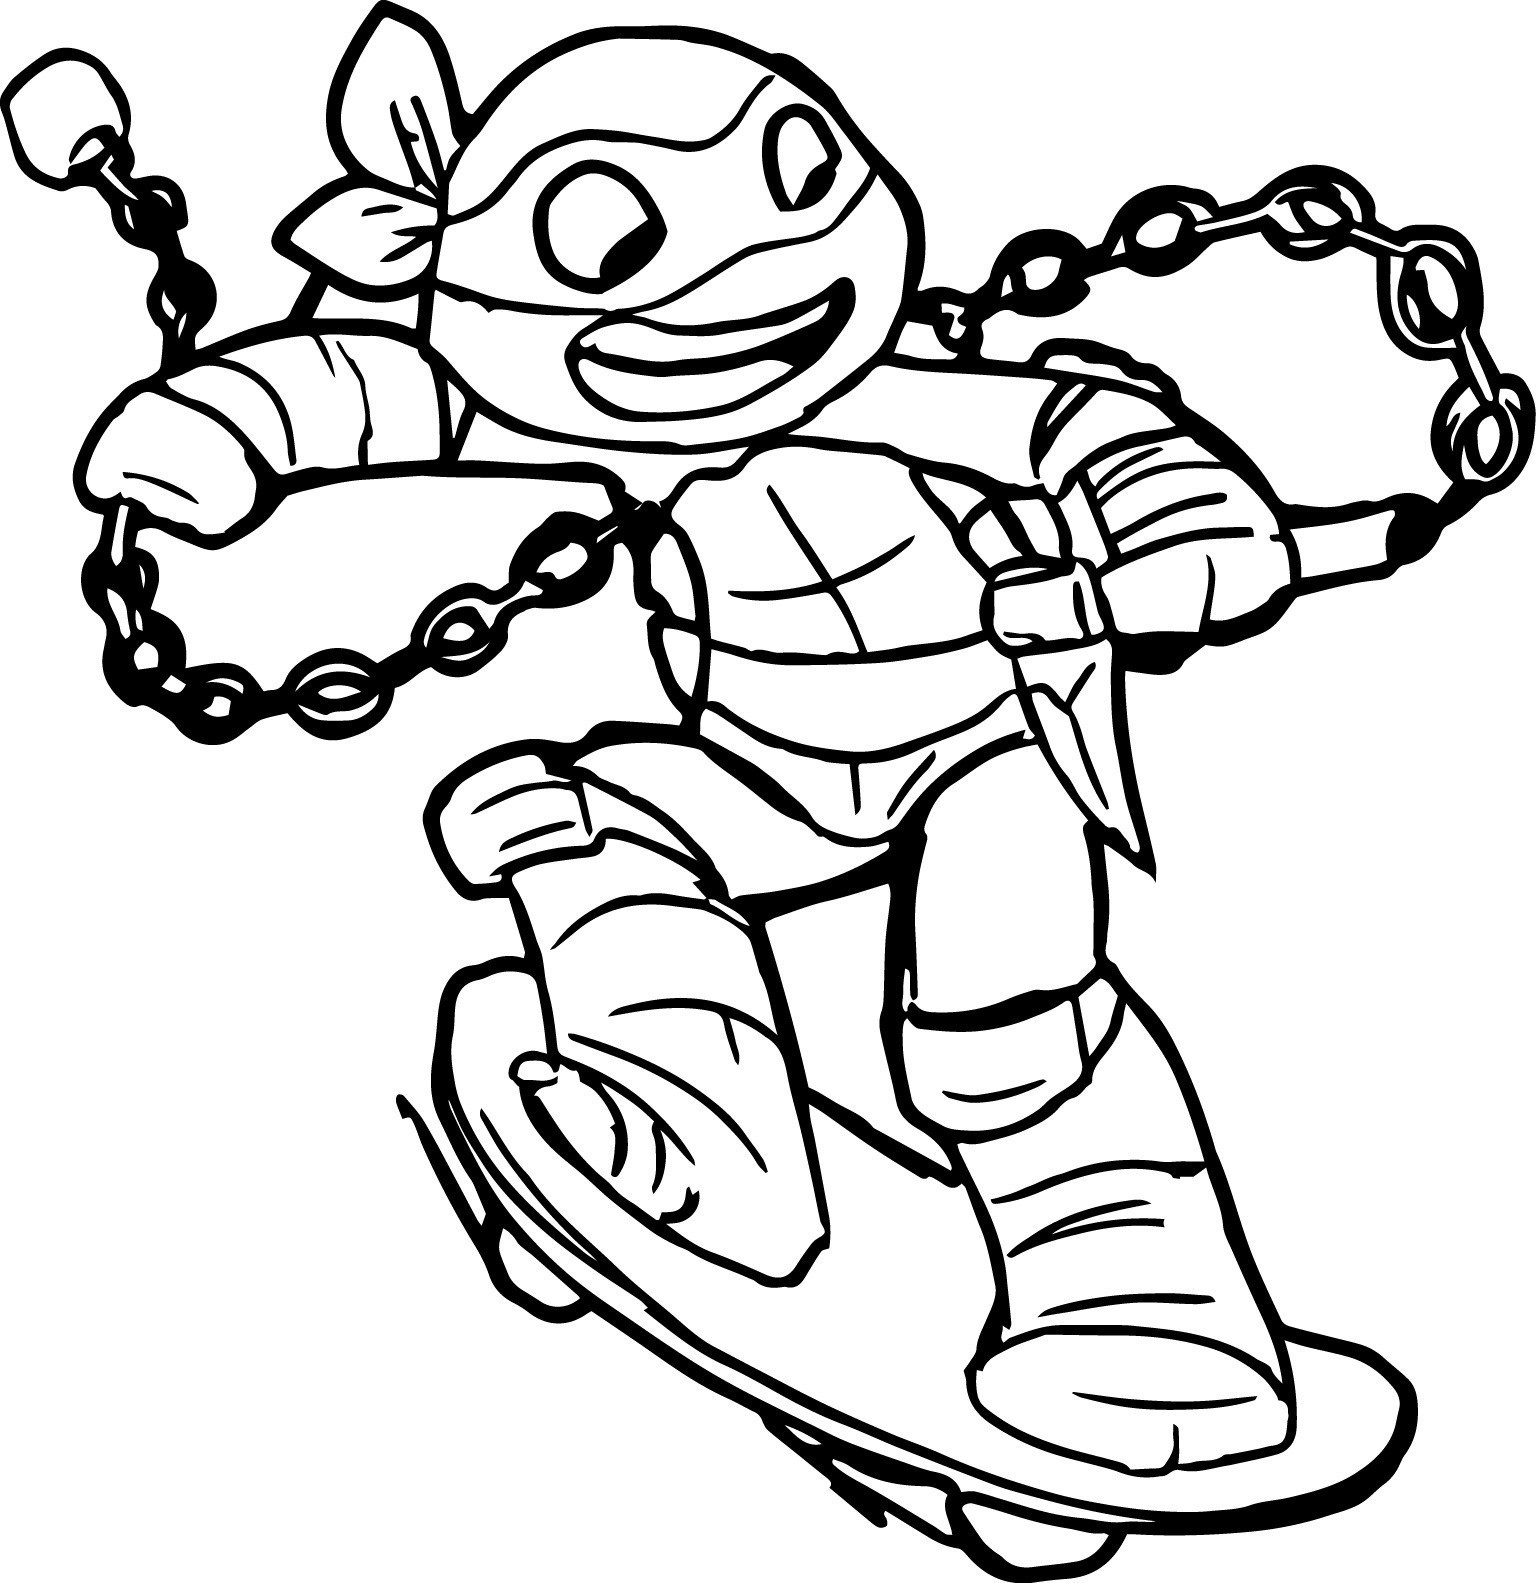 Ninja Coloring Pages For Kids
 Teenage Mutant Ninja Turtles Coloring Pages Best